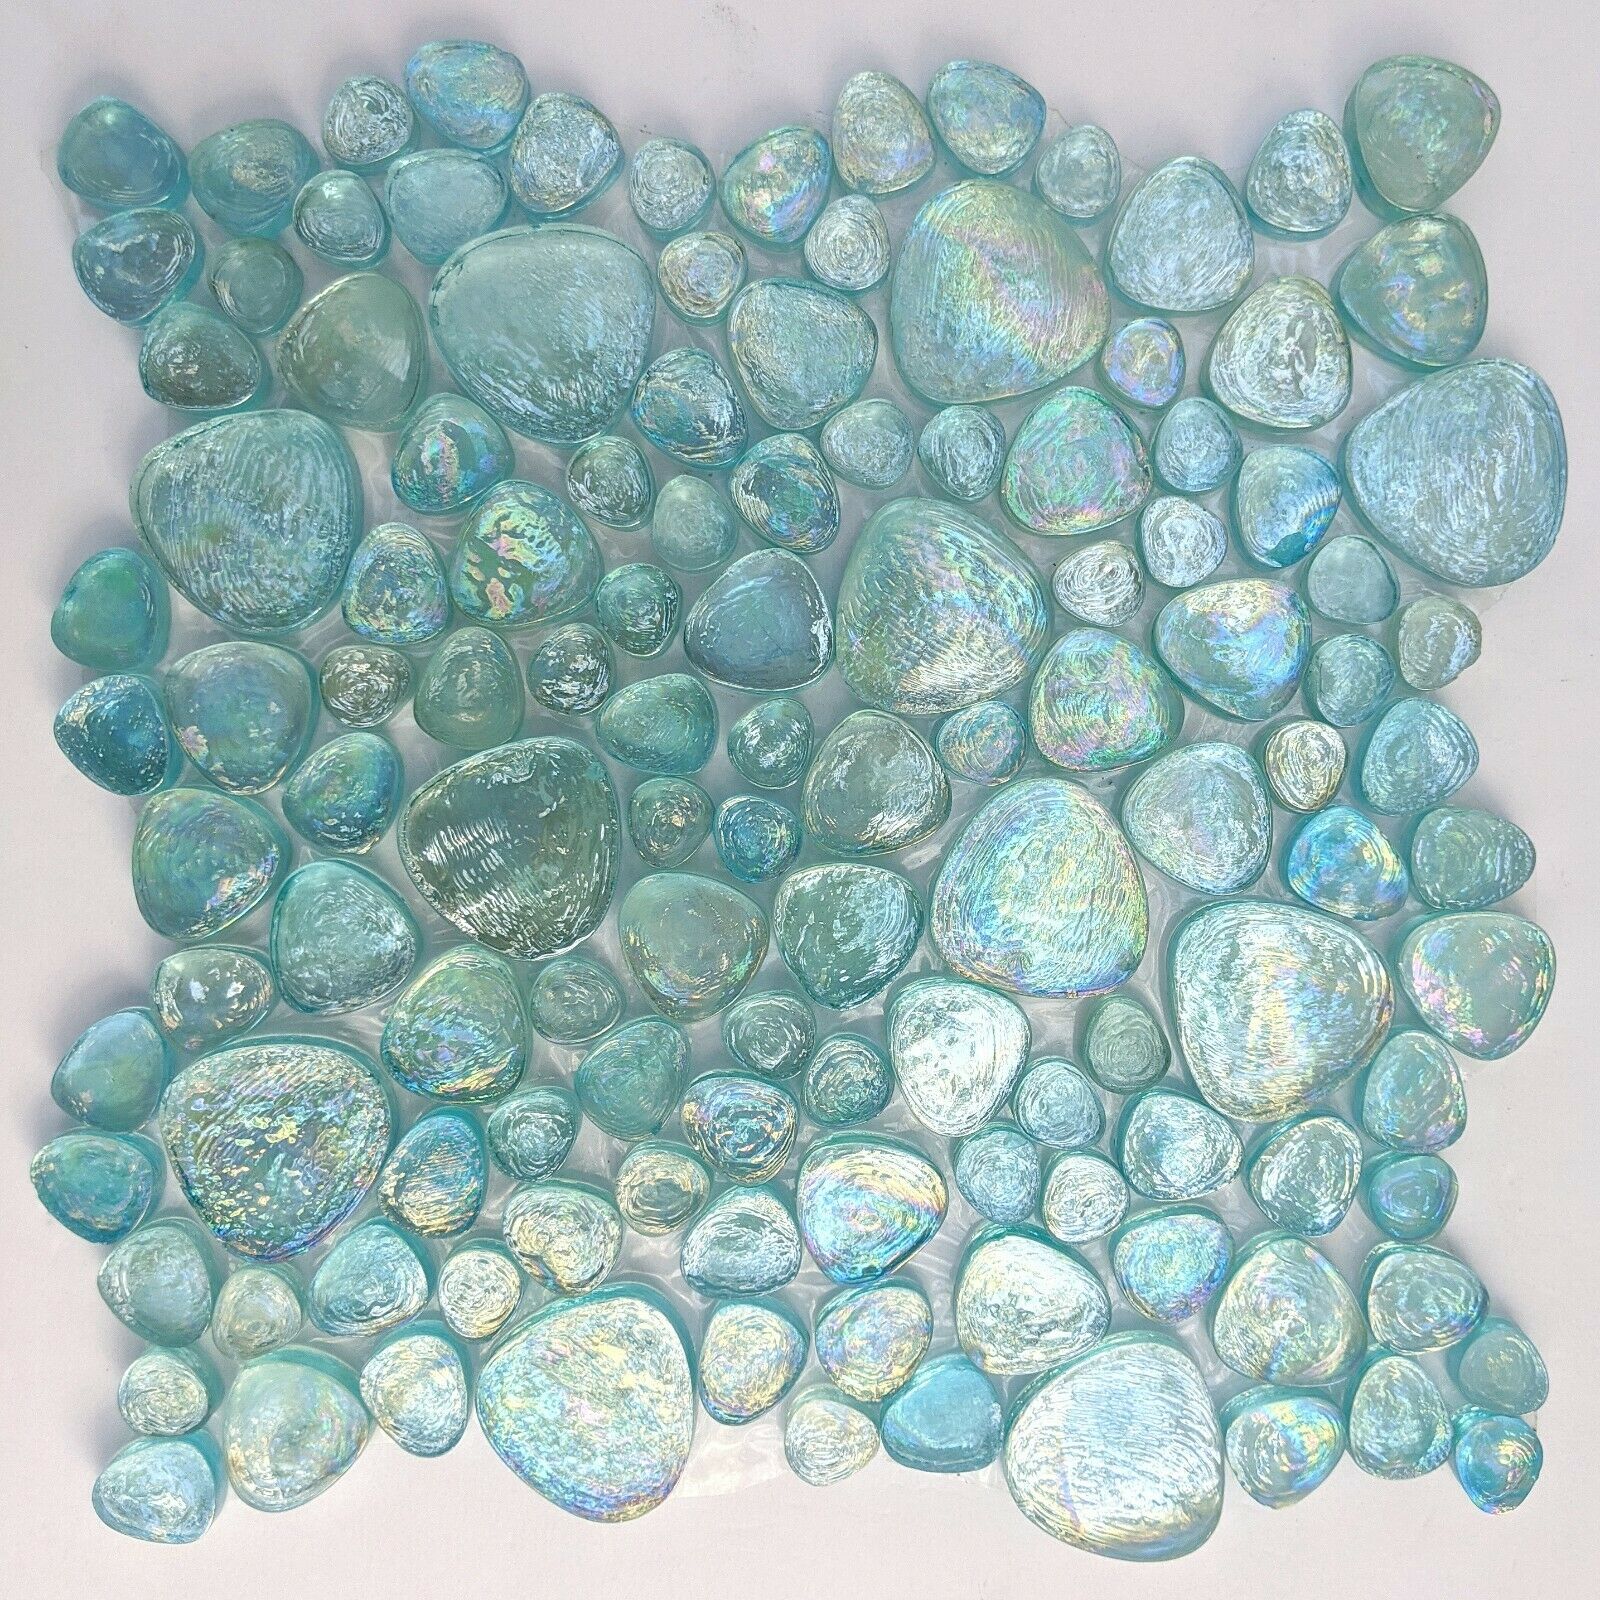 Iridescent Pebble Glass Mosaic Tile Aqua Blue For Wall & Floor